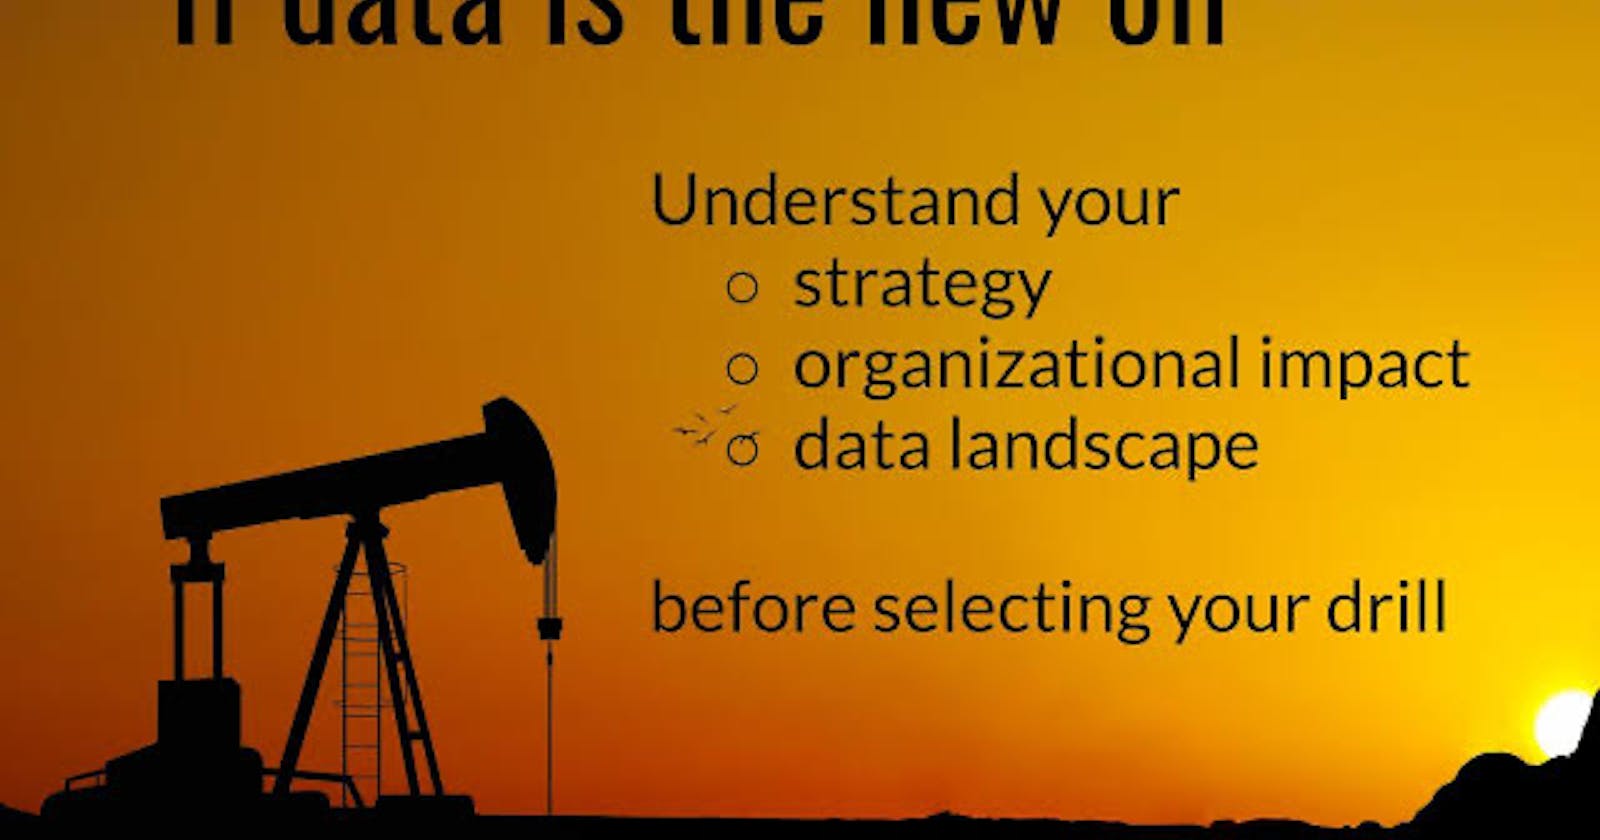 Data more than oil